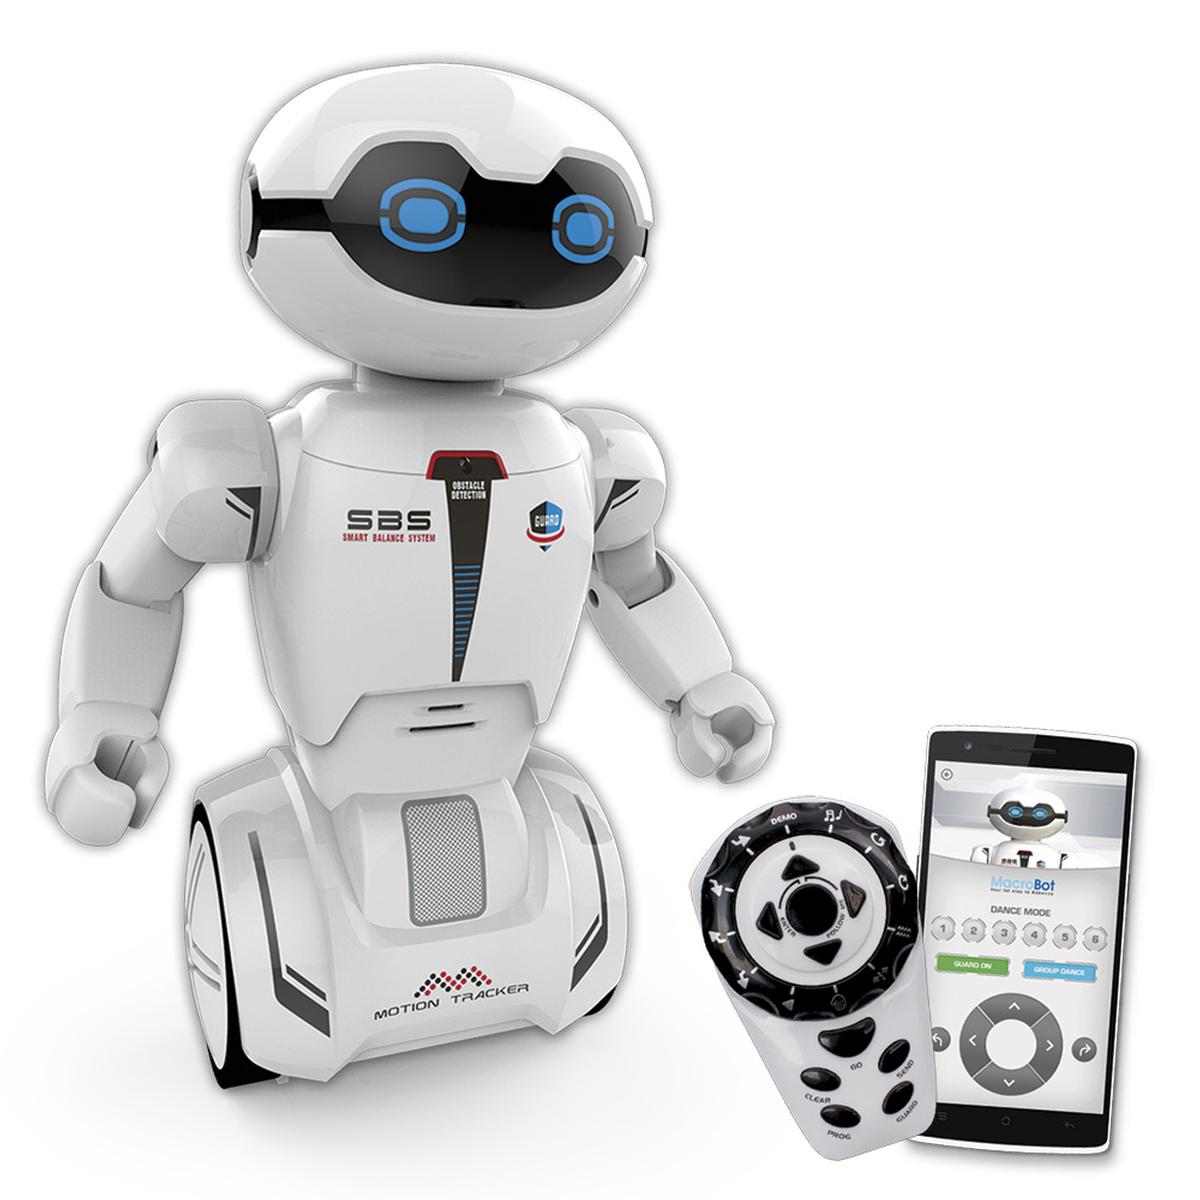 Включи 5 роботов. Macrobot Ycoo. Silverlit Robot 2022. Робот мотион трекер. Робот Макробот Silverlit 88045 инструкция.